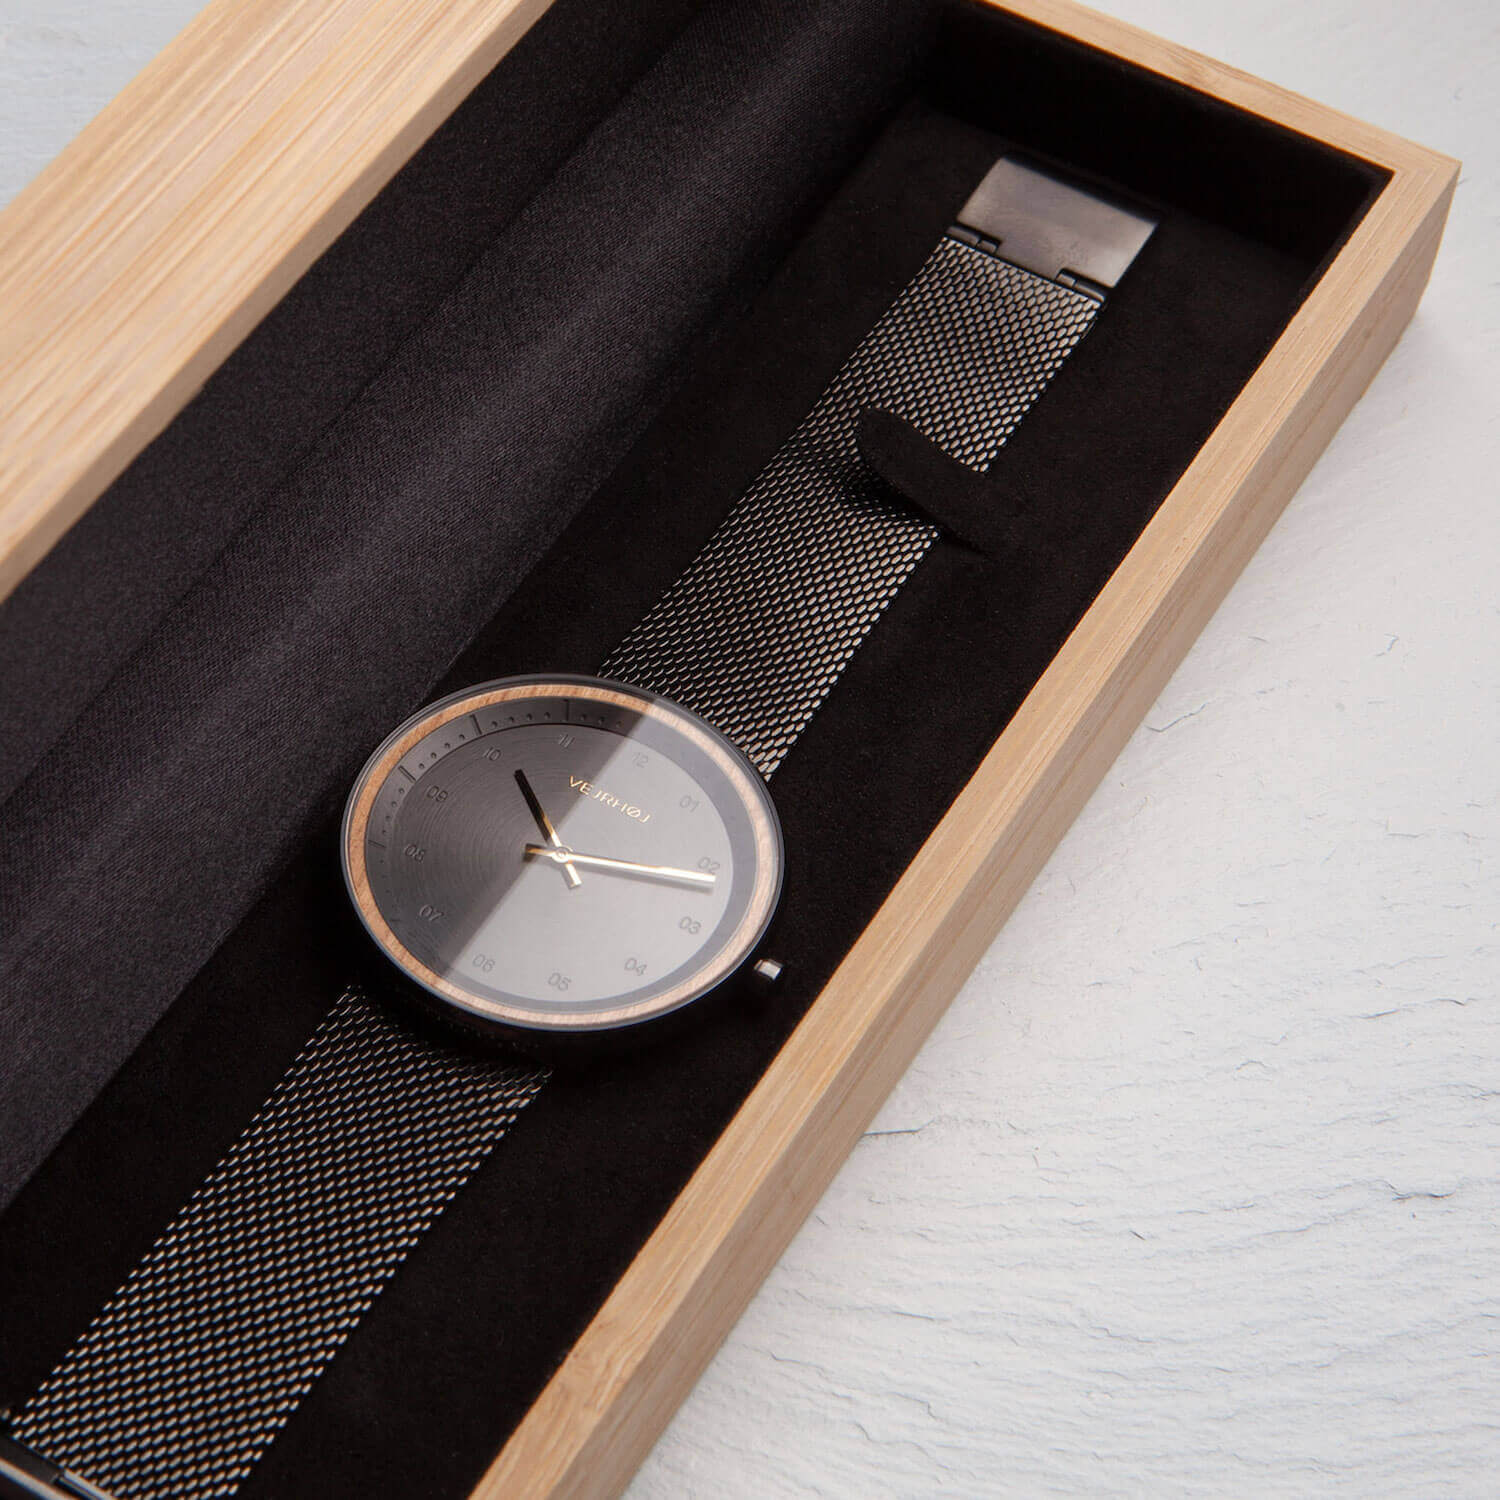 black simple watch in wooden box